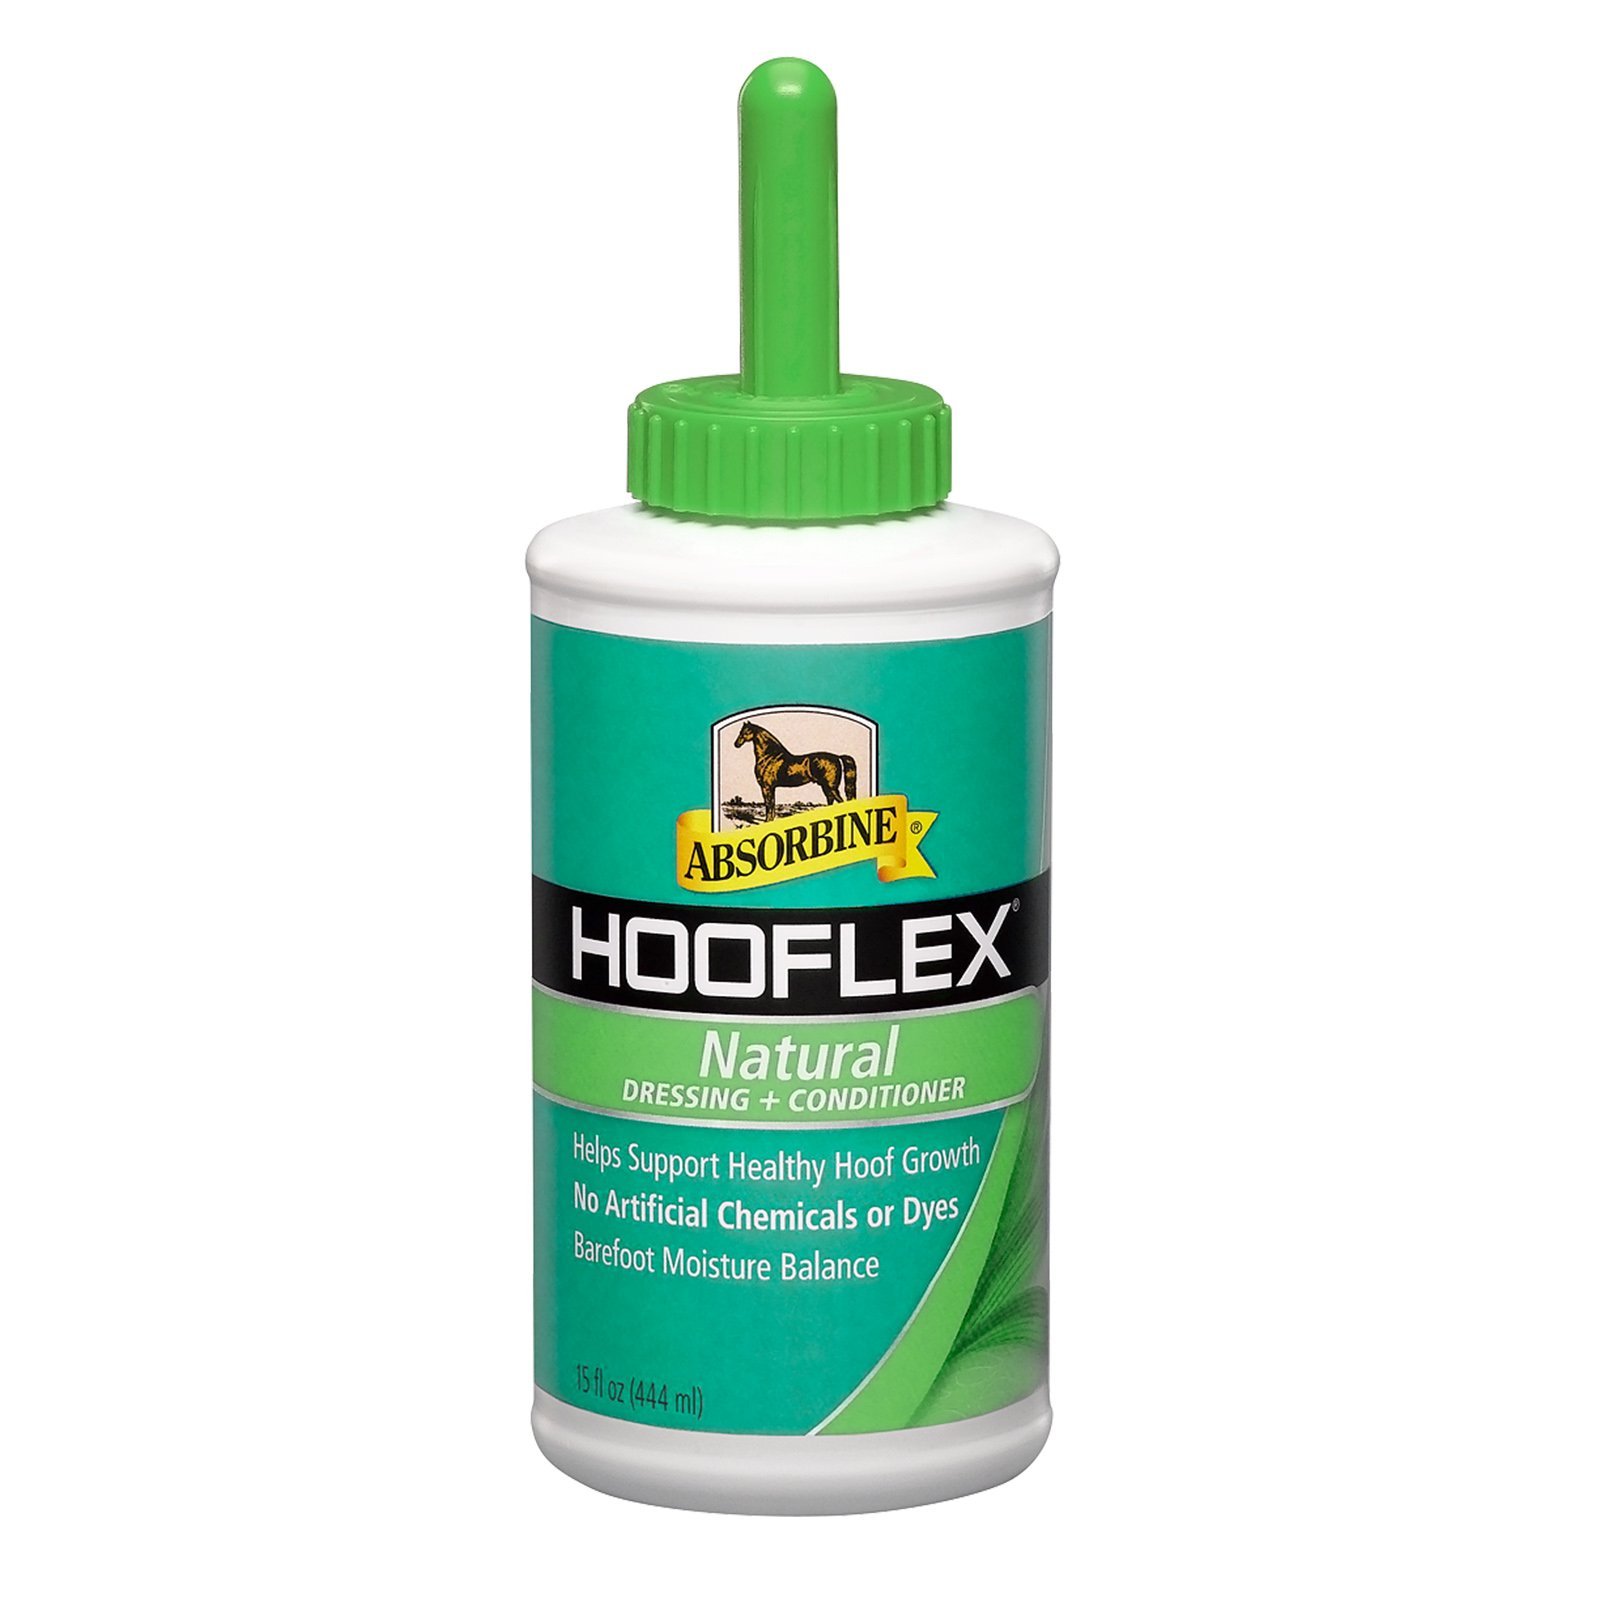 Absorbine Hooflex Natural Dressing & Conditioner